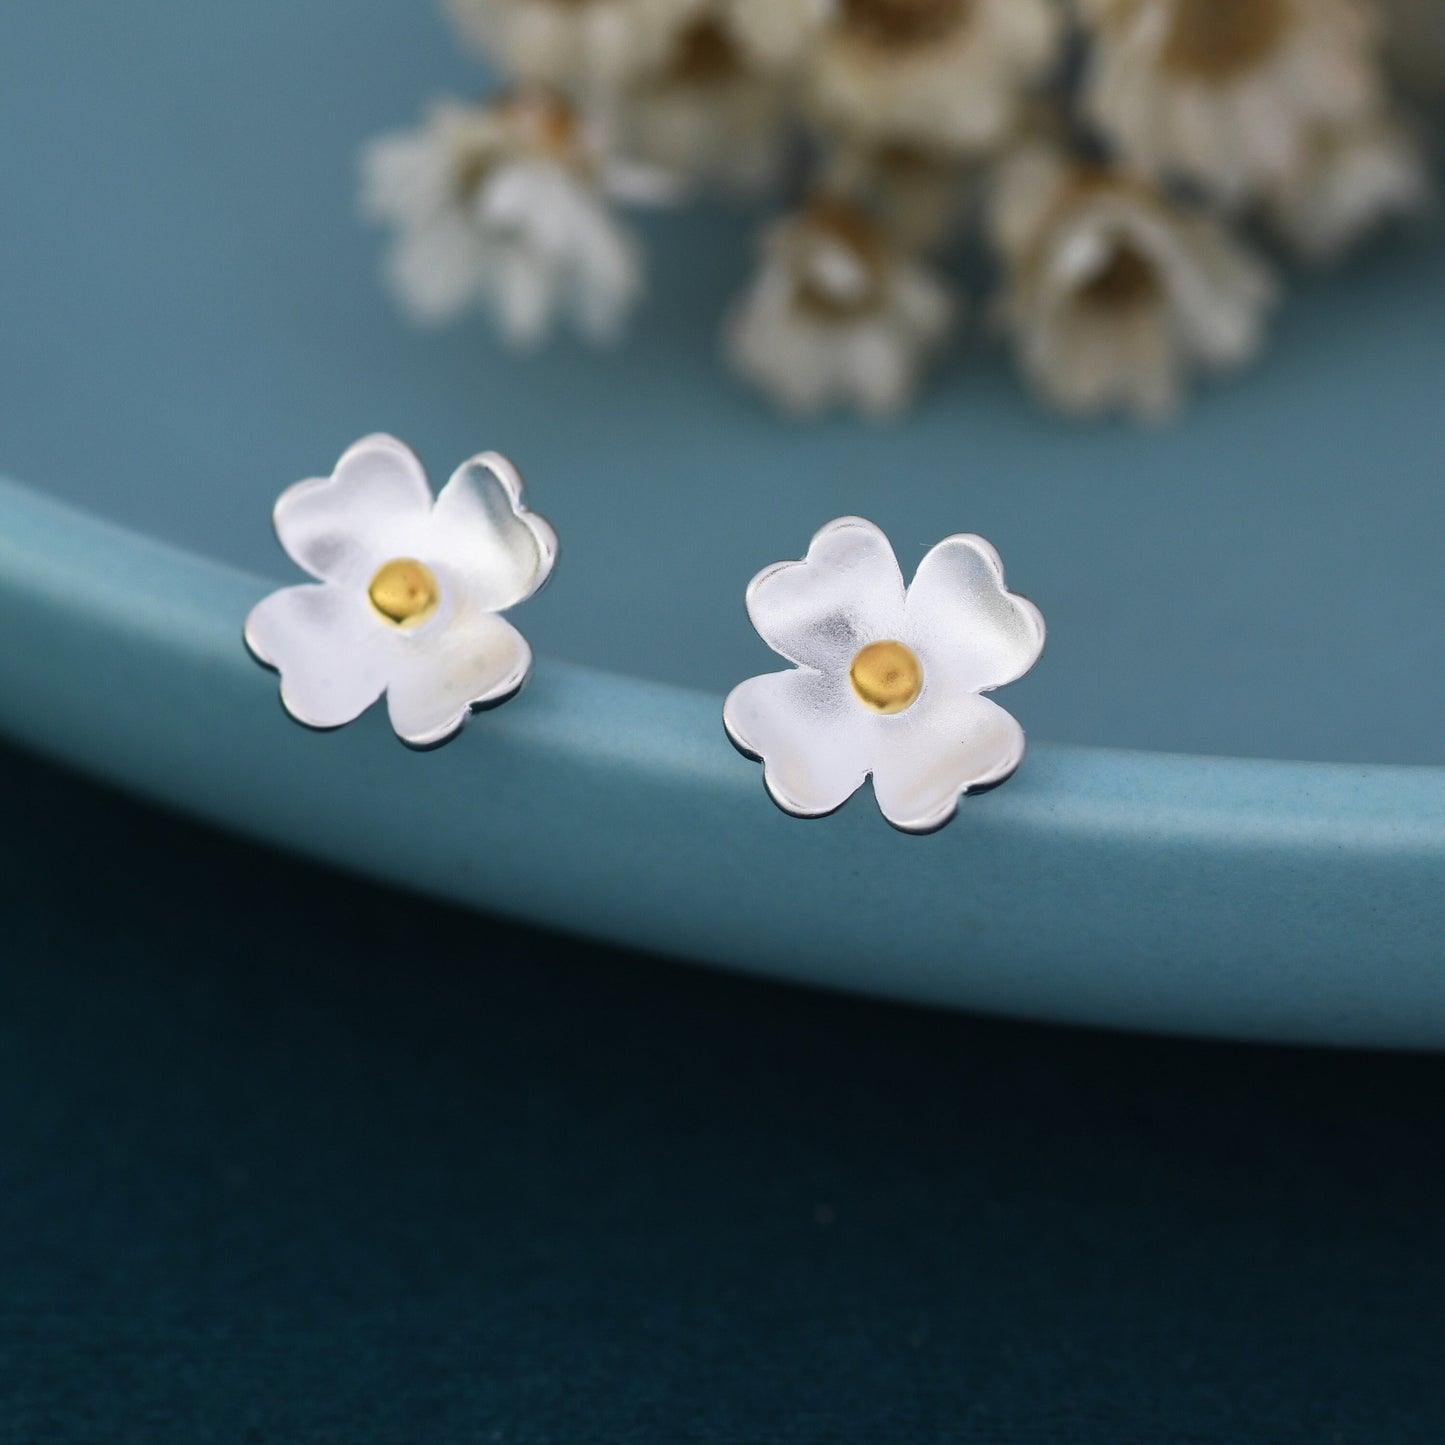 Buttercup Flower Stud Earrings in Sterling Silver, Blossom Earrings, Sand Blasted Finish, Nature Inspired Earrings